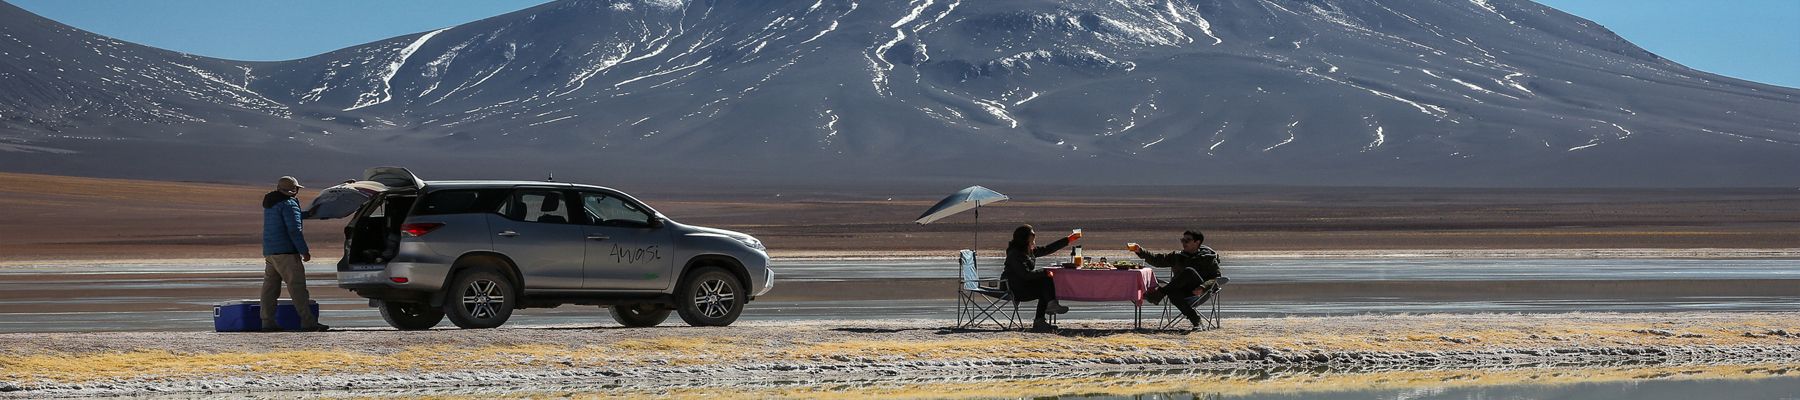 Lunch at the Desert ©Luciano Bacchi - Atacama Desert - Atelier South America